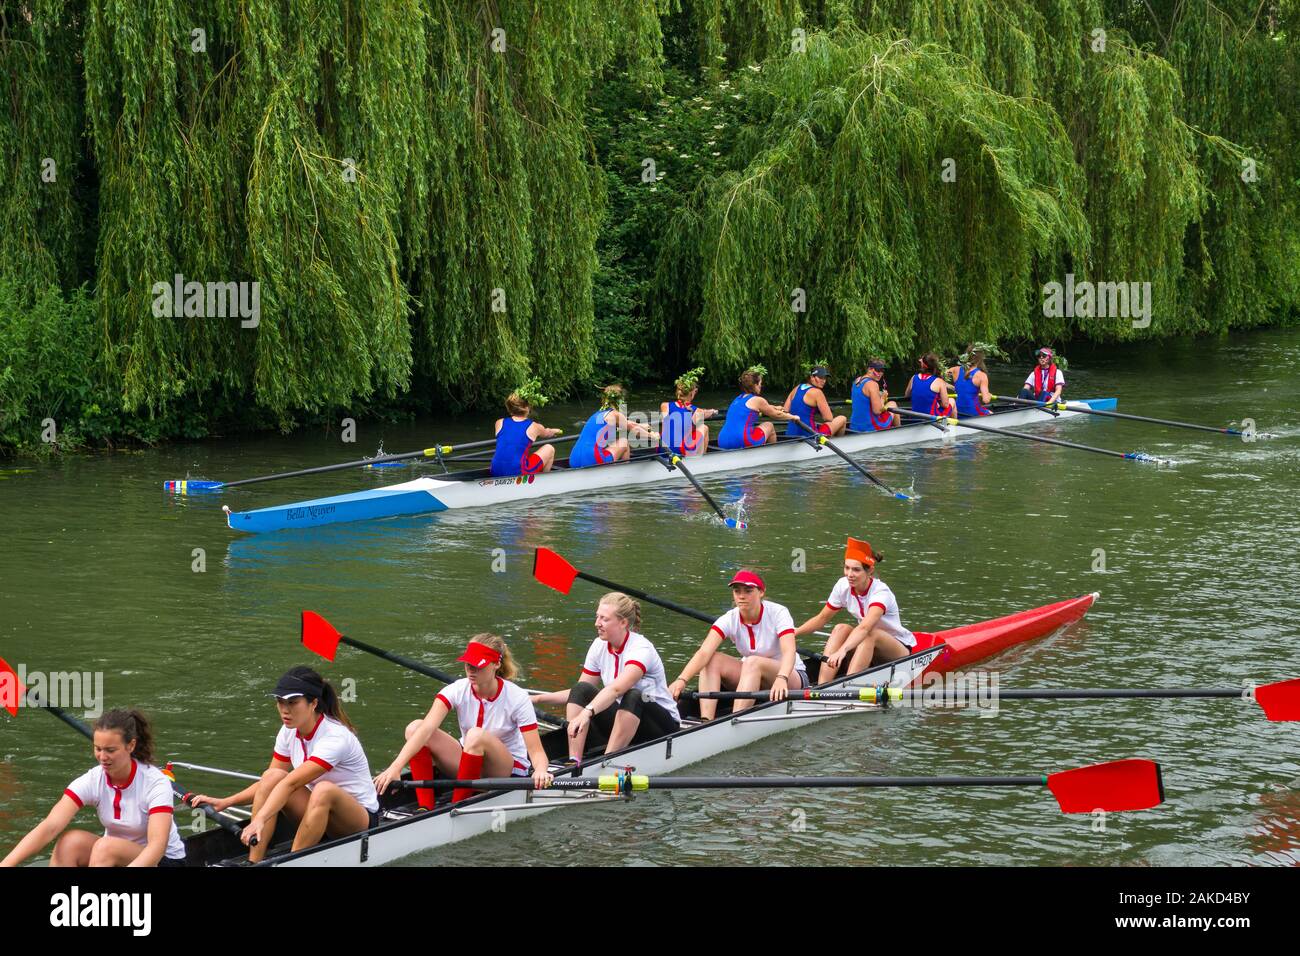 Female boat crew on the river Cam taking part in The Bumps row boat regatta in Summer, Cambridge, UK Stock Photo